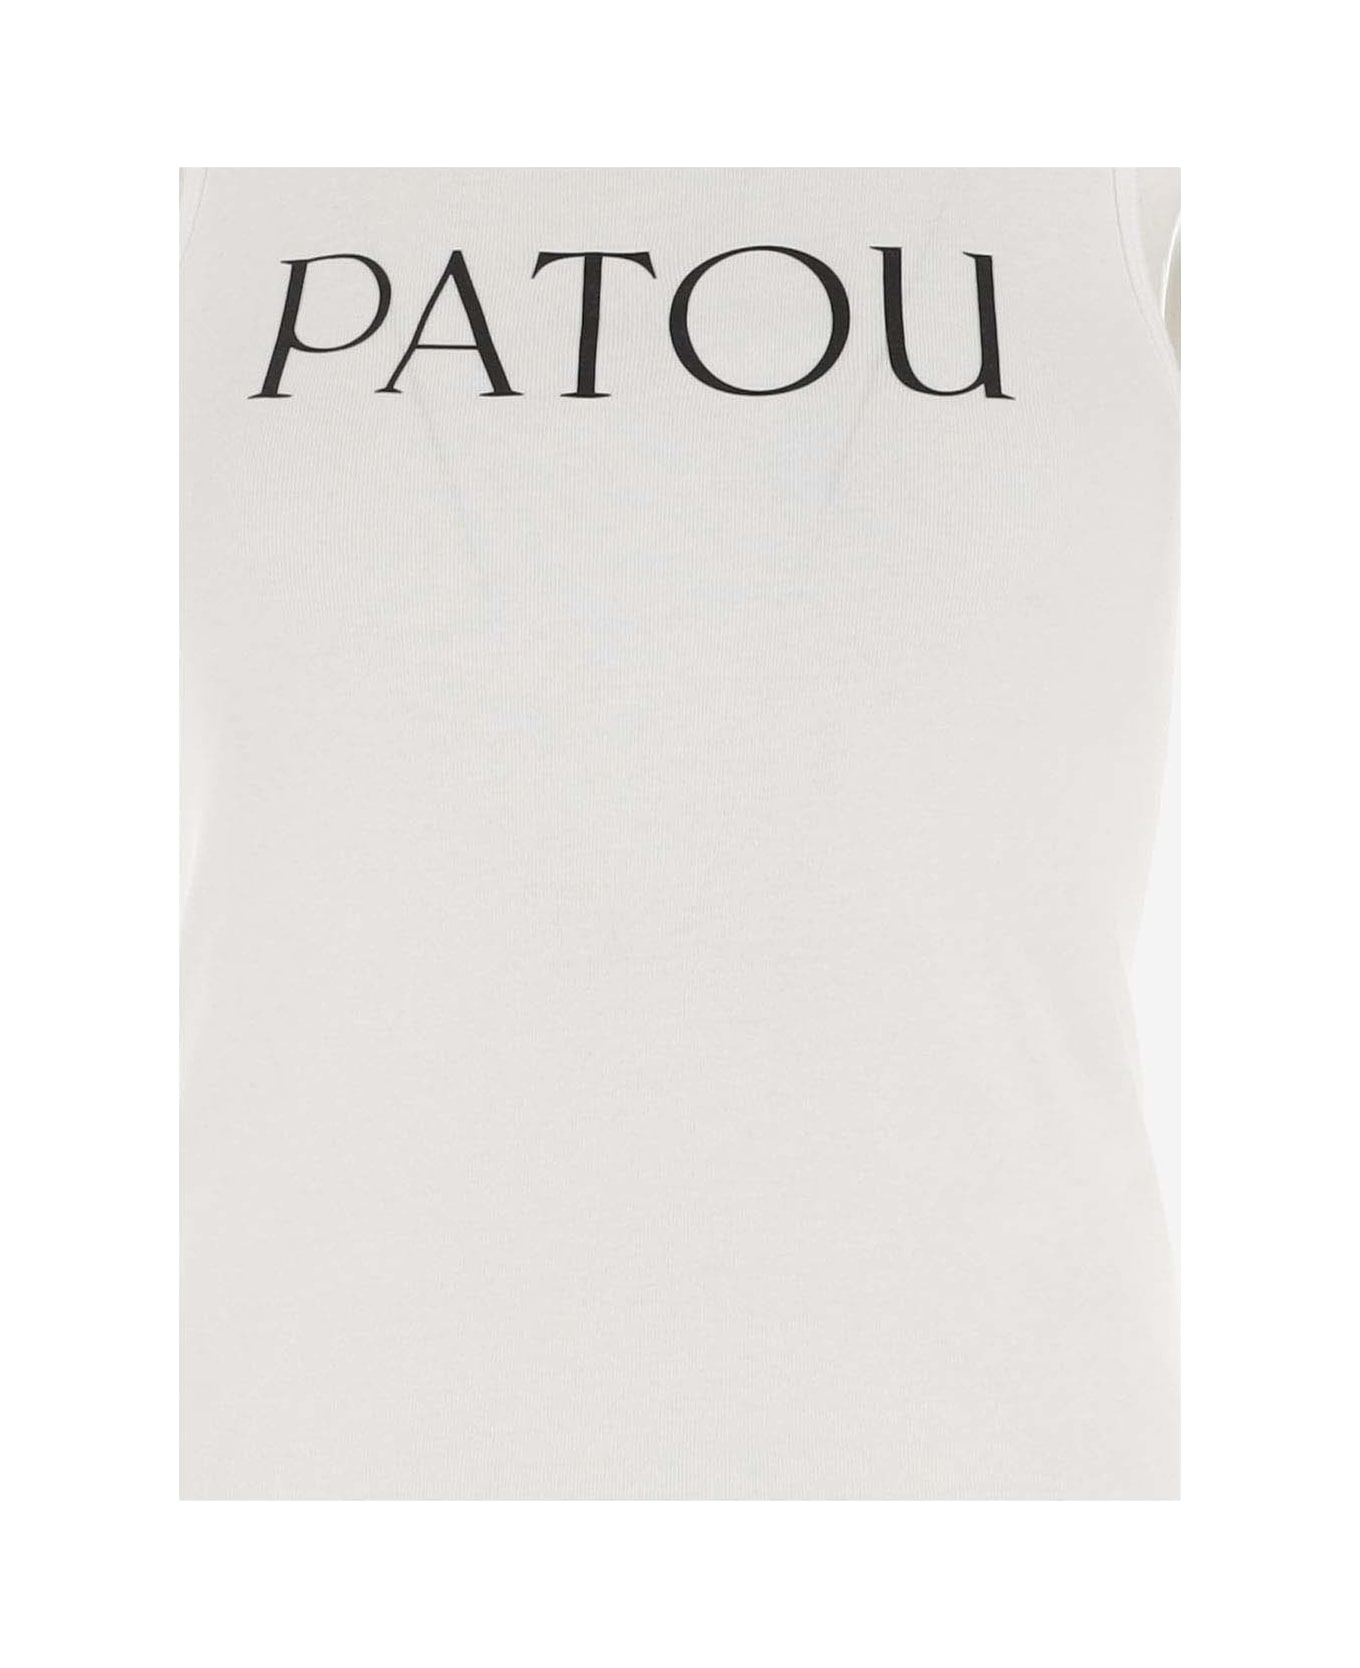 Patou Tank Top With Logo - White